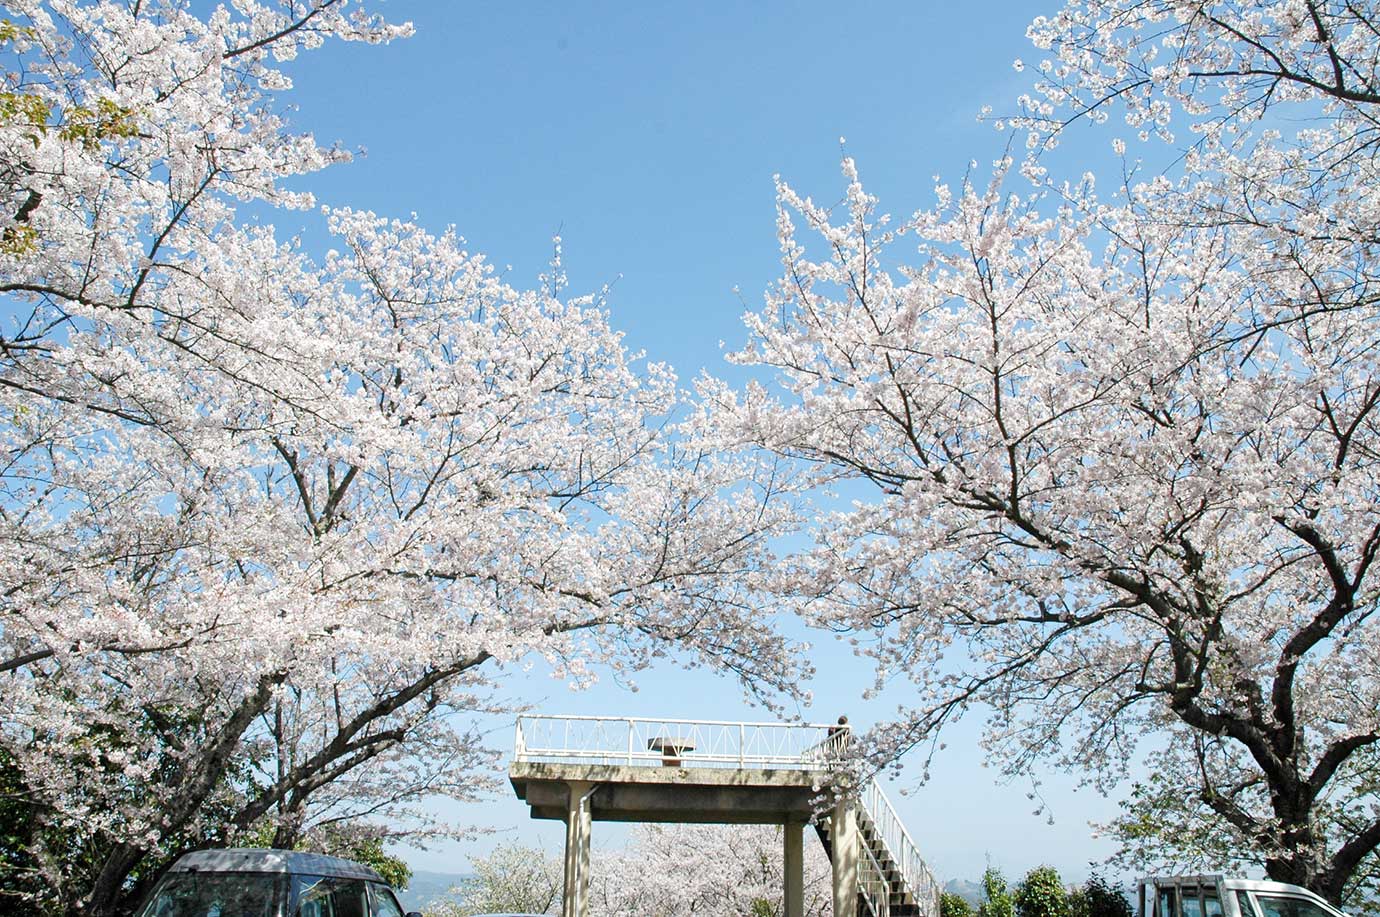 Oyama Park's cherry blossoms